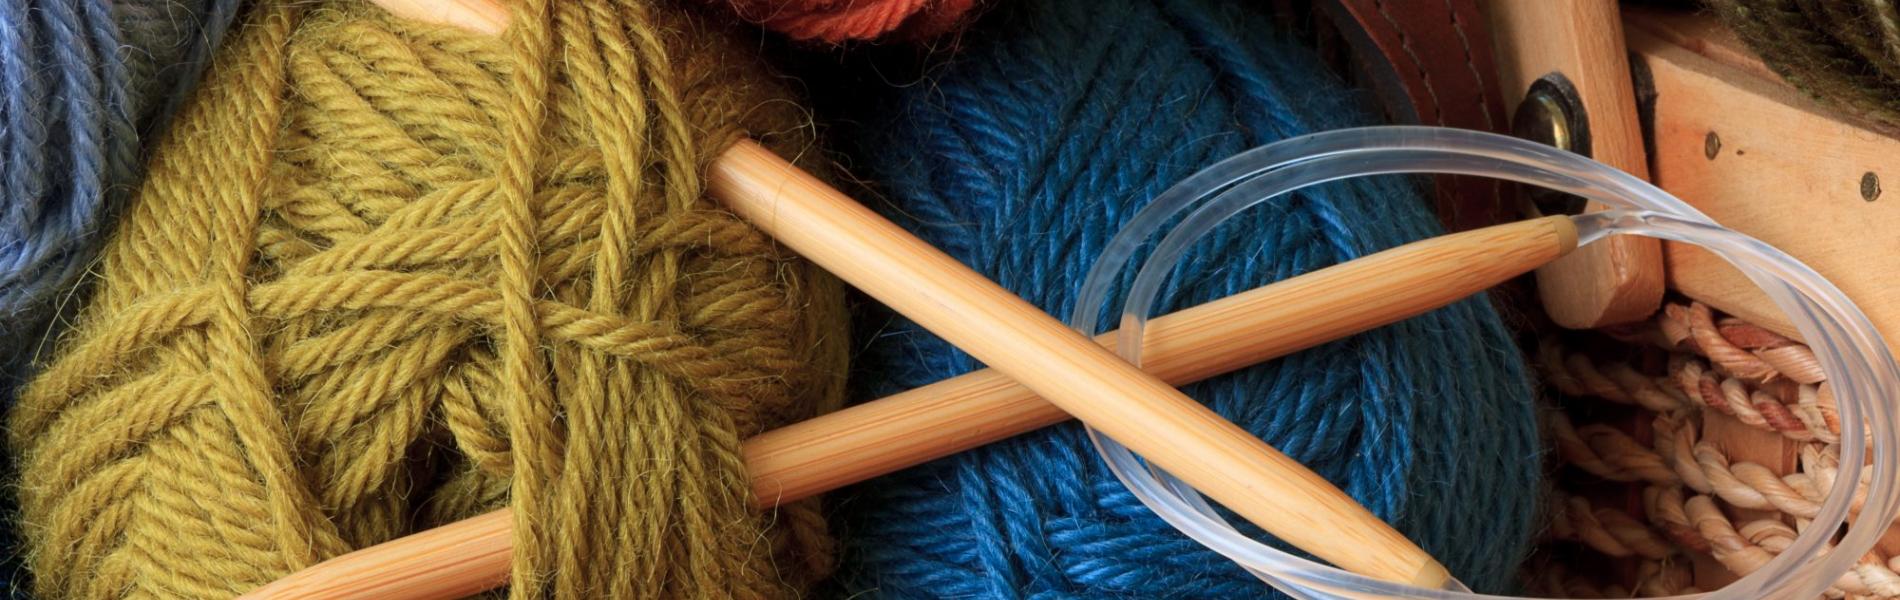 image of yarn and knitting needles